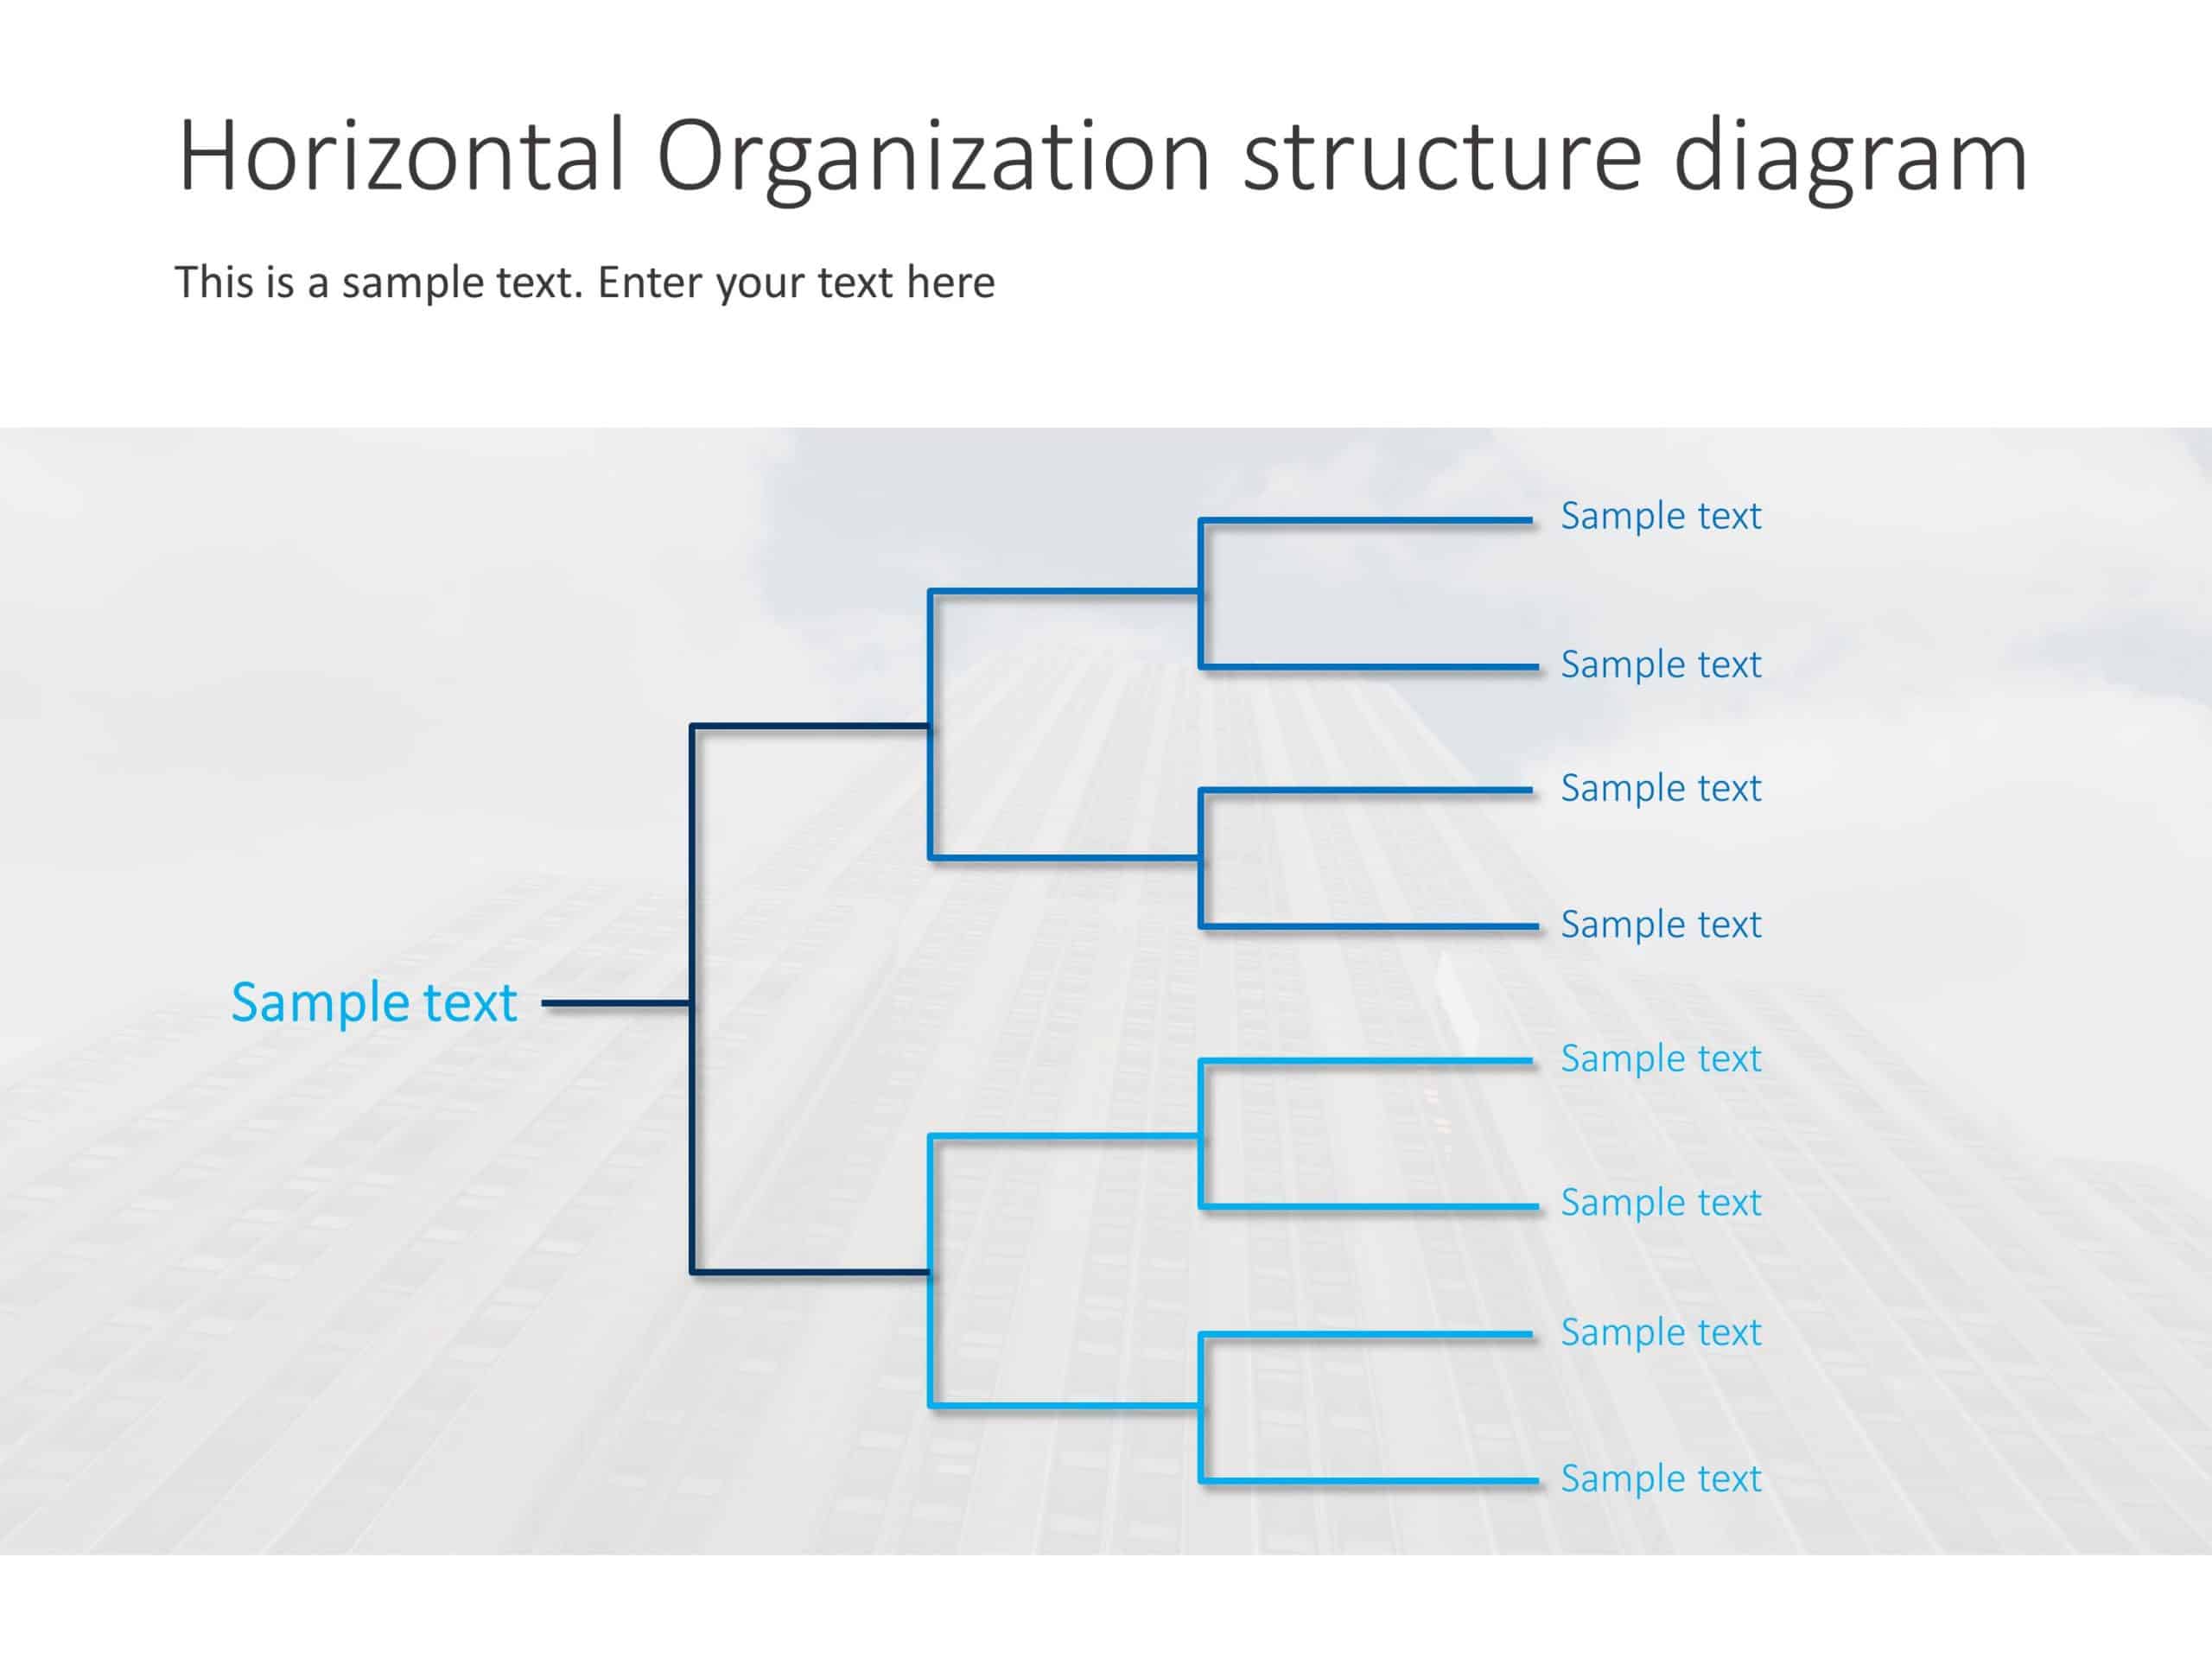 Horizontal Organization Structure Diagram PowerPoint Template & Google Slides Theme